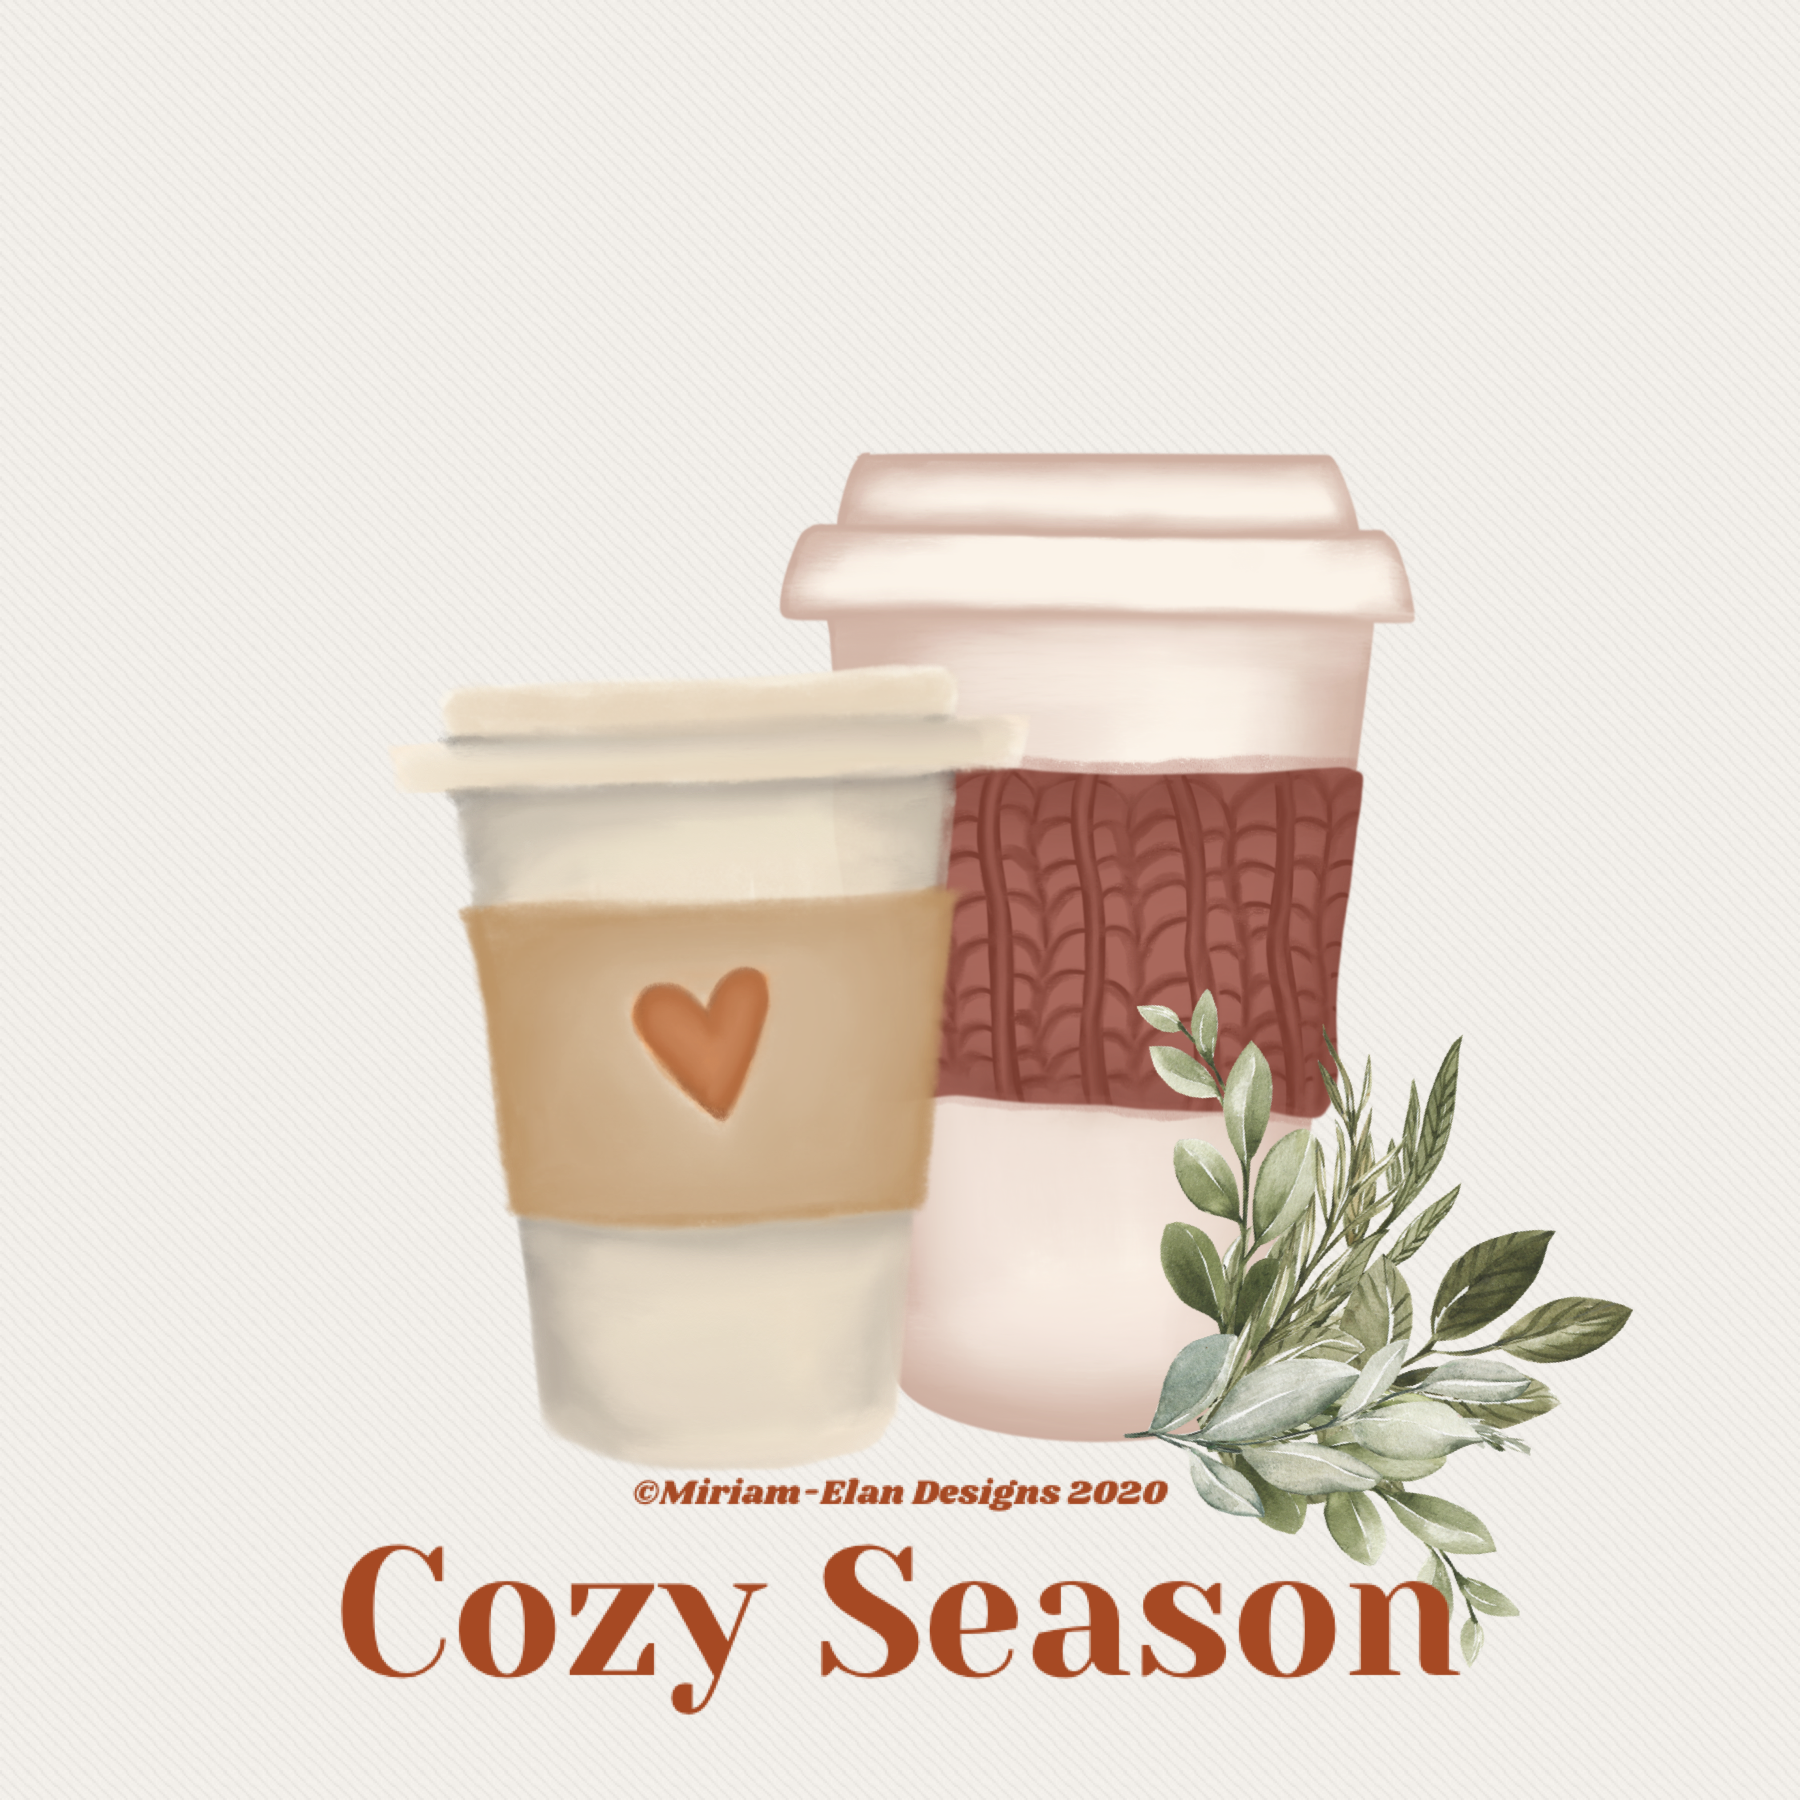 Coming Soon...!!!
#CozySeason